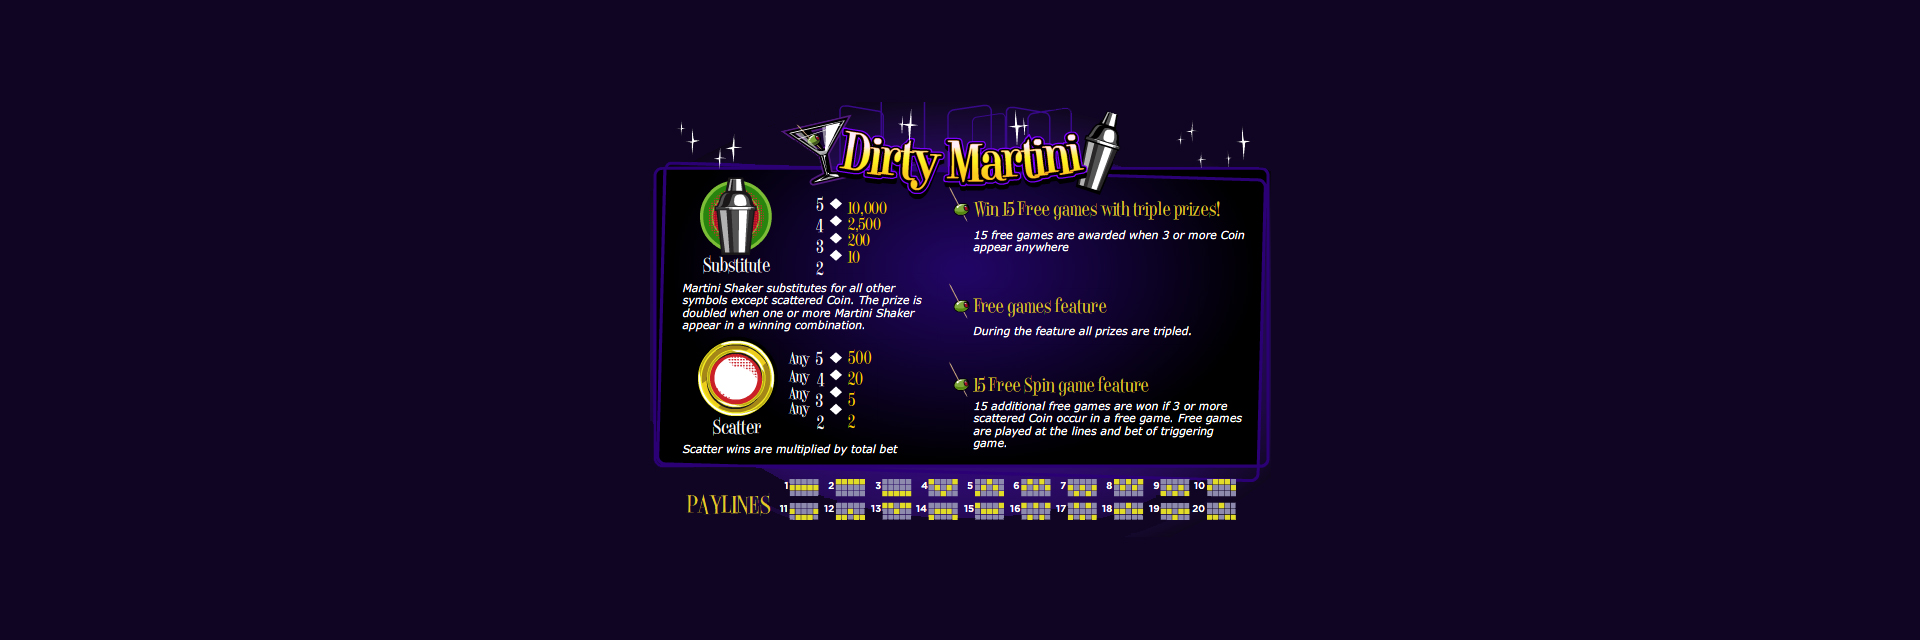 Dirty Martini Slot bonuses.